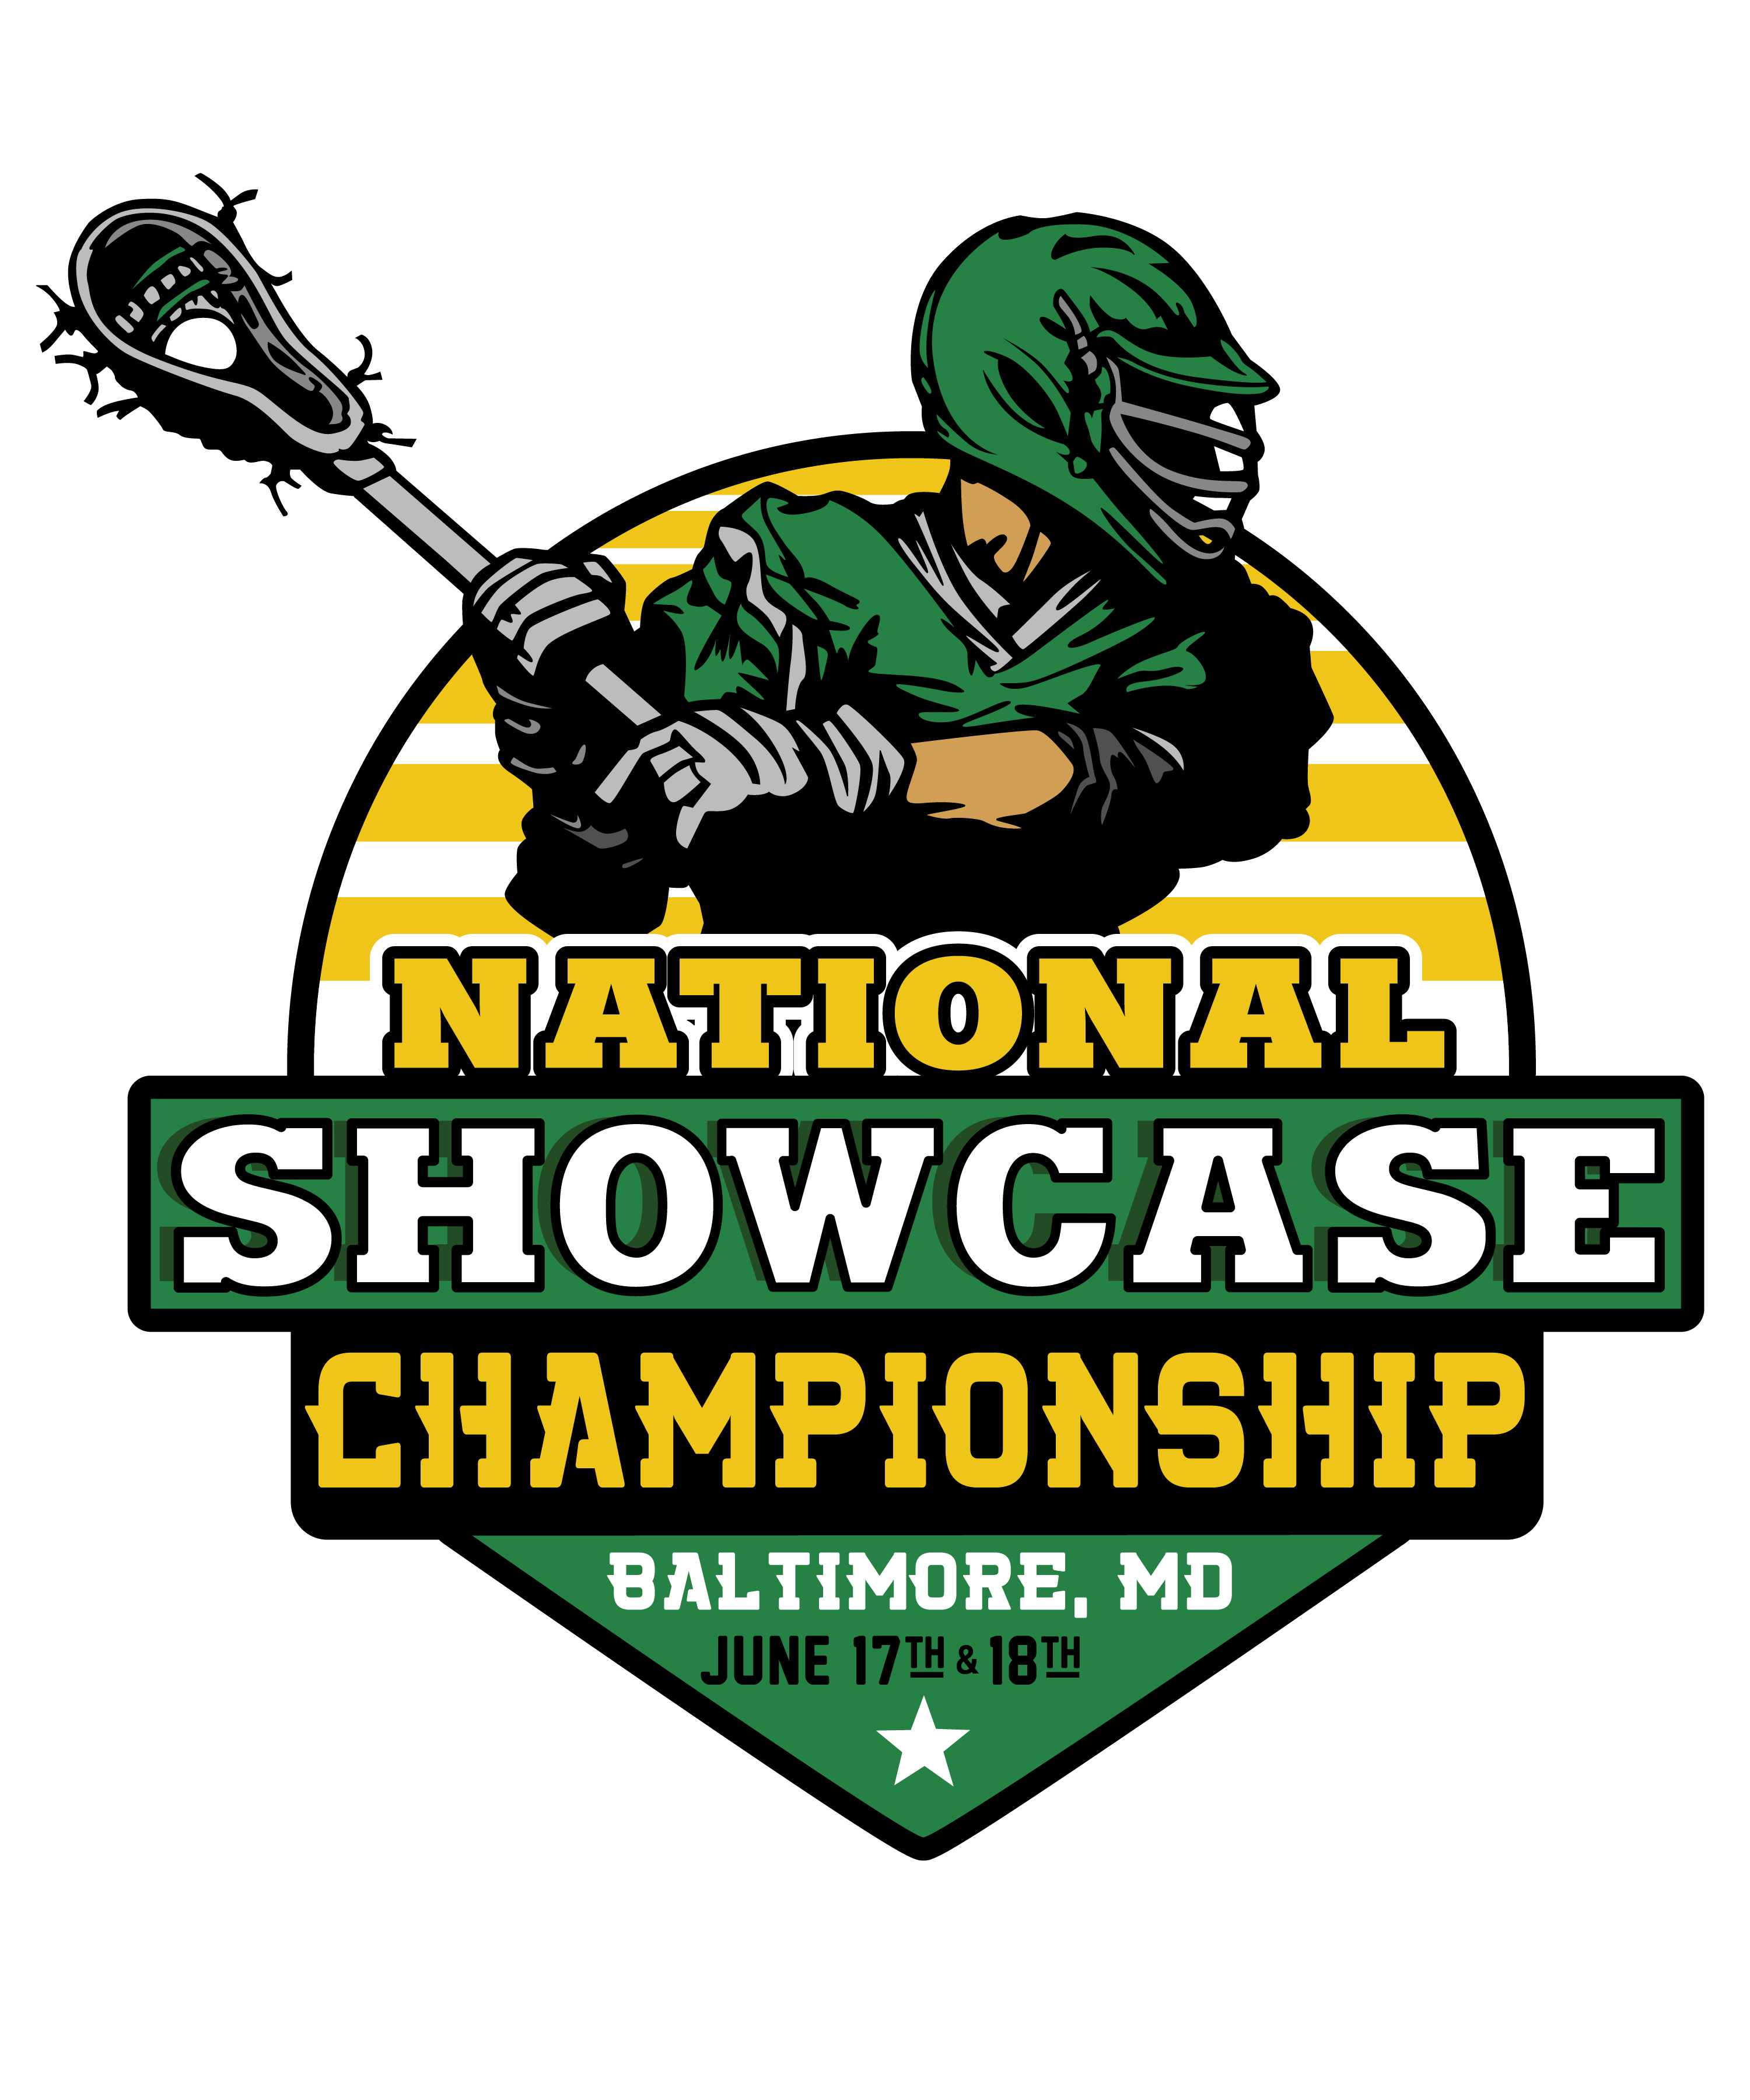 National Showcase Championship logo